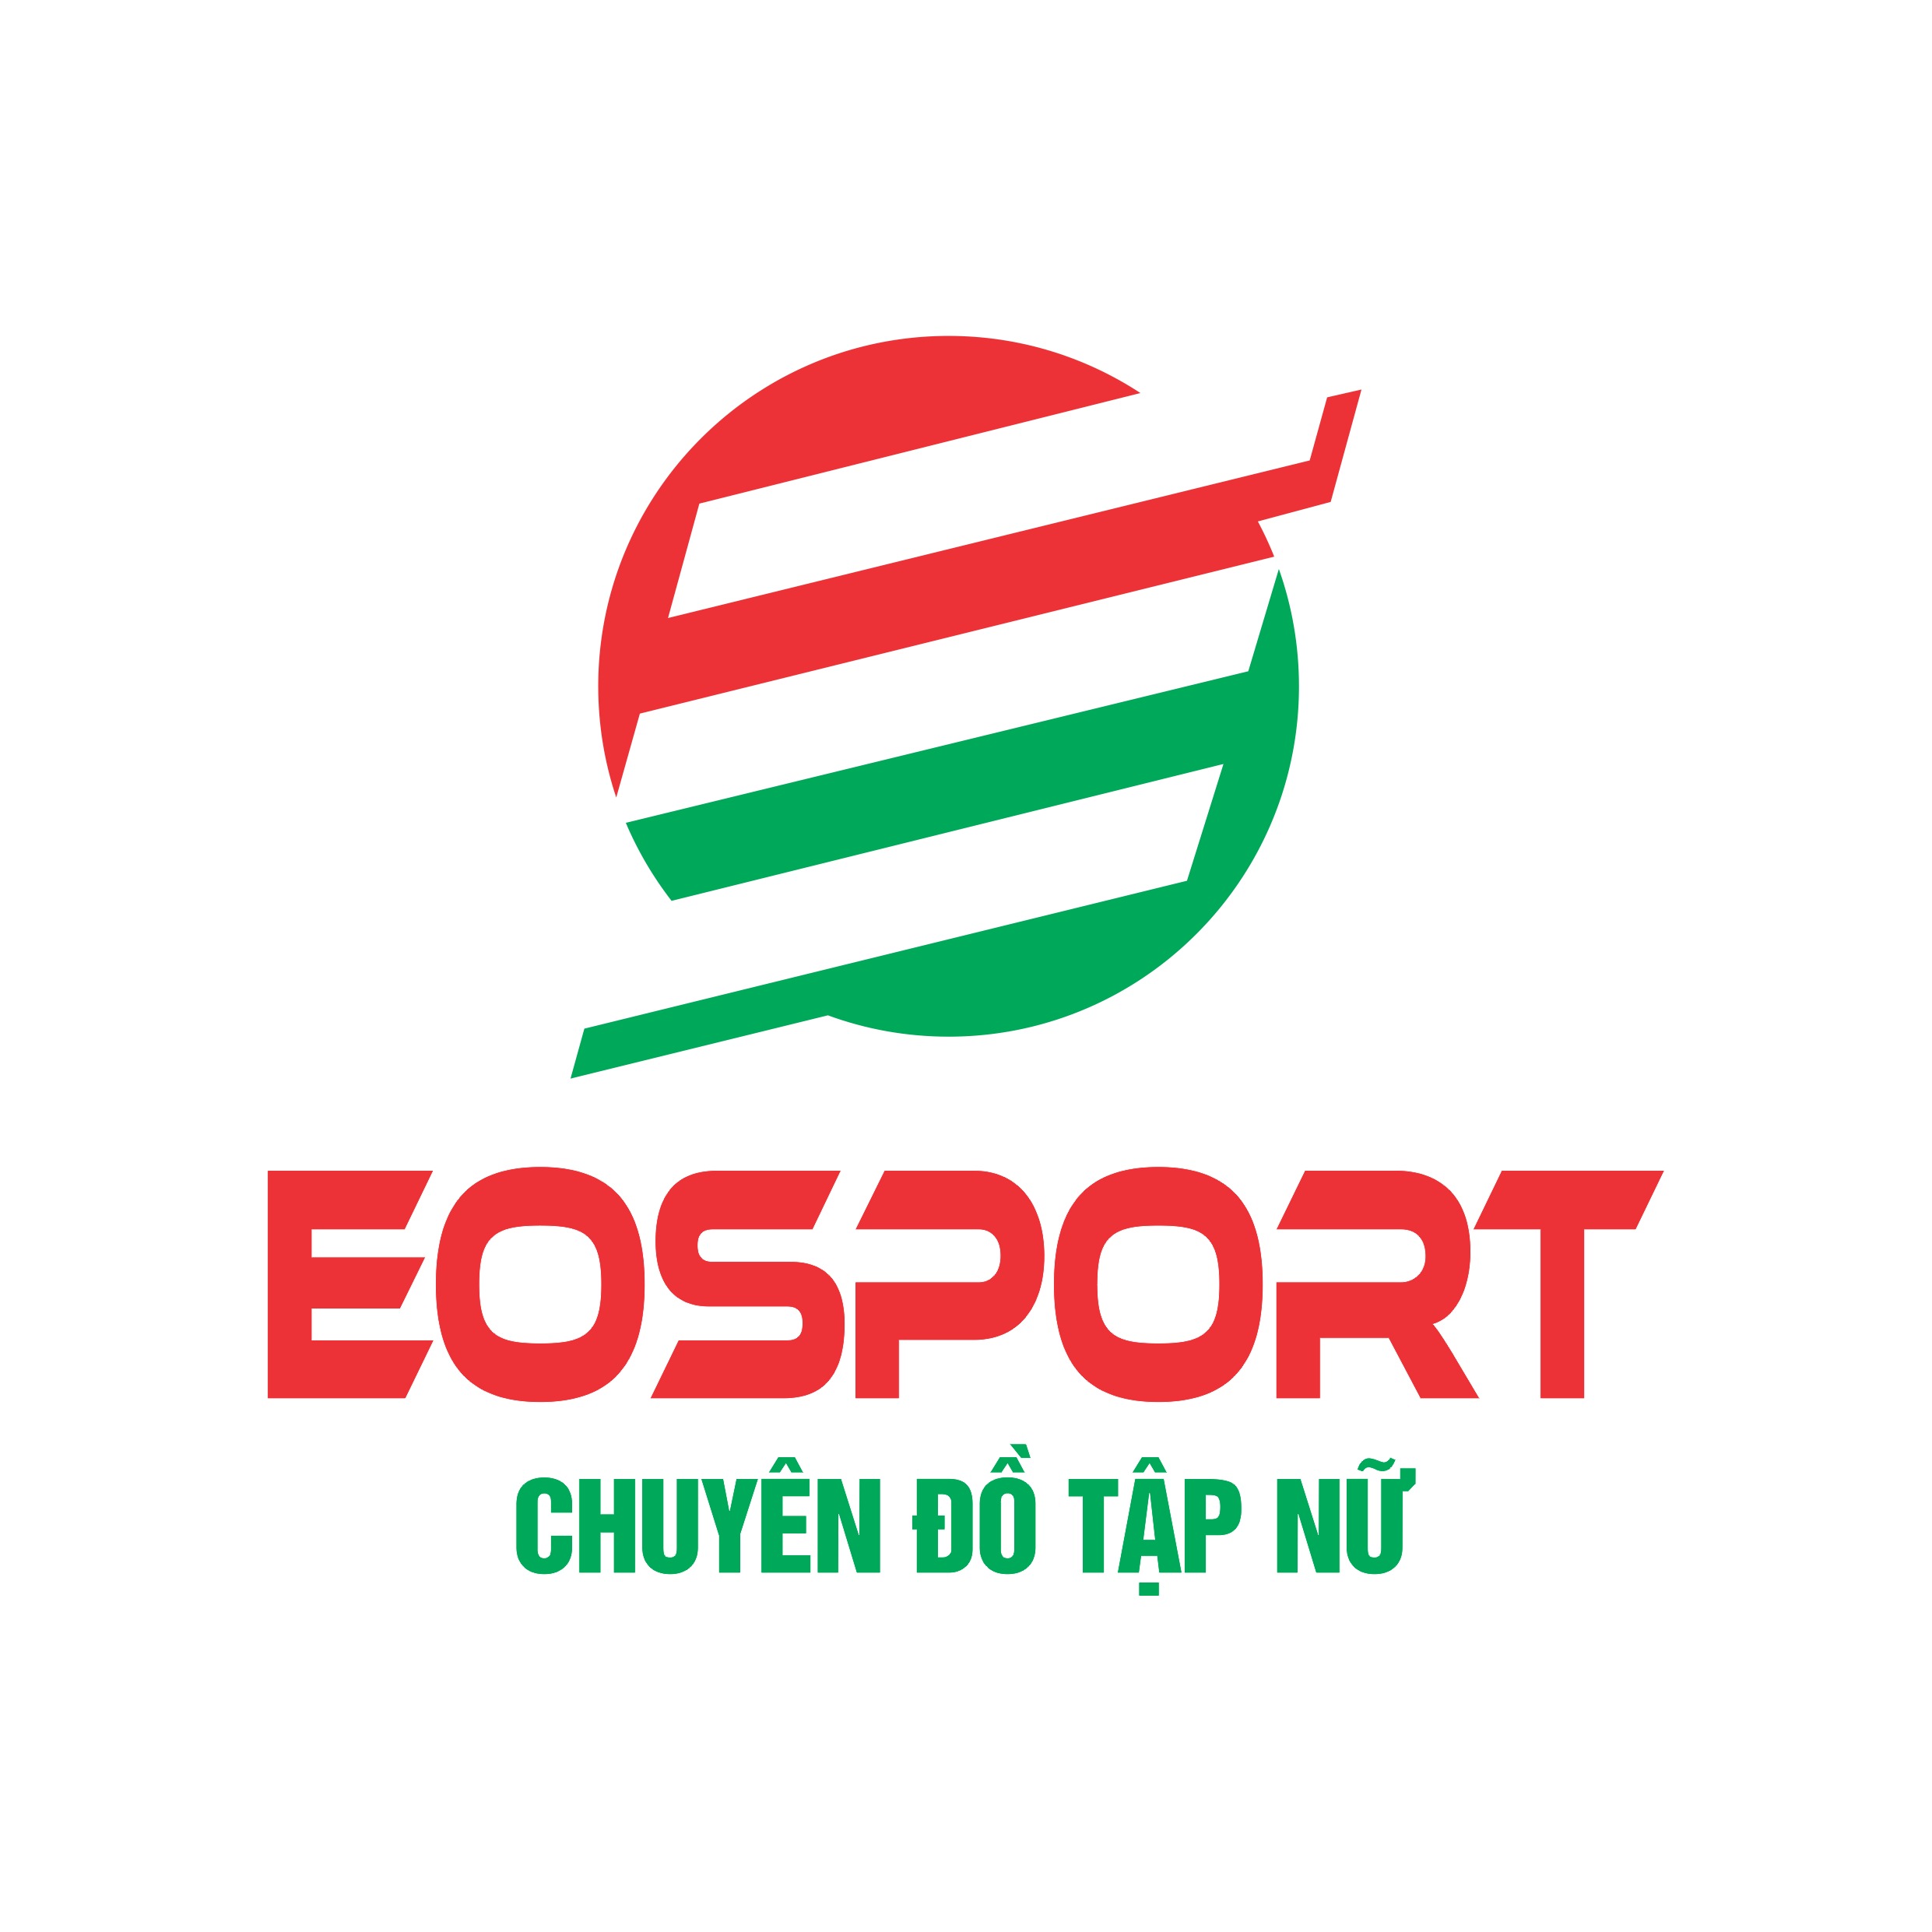 Eo Sport 247